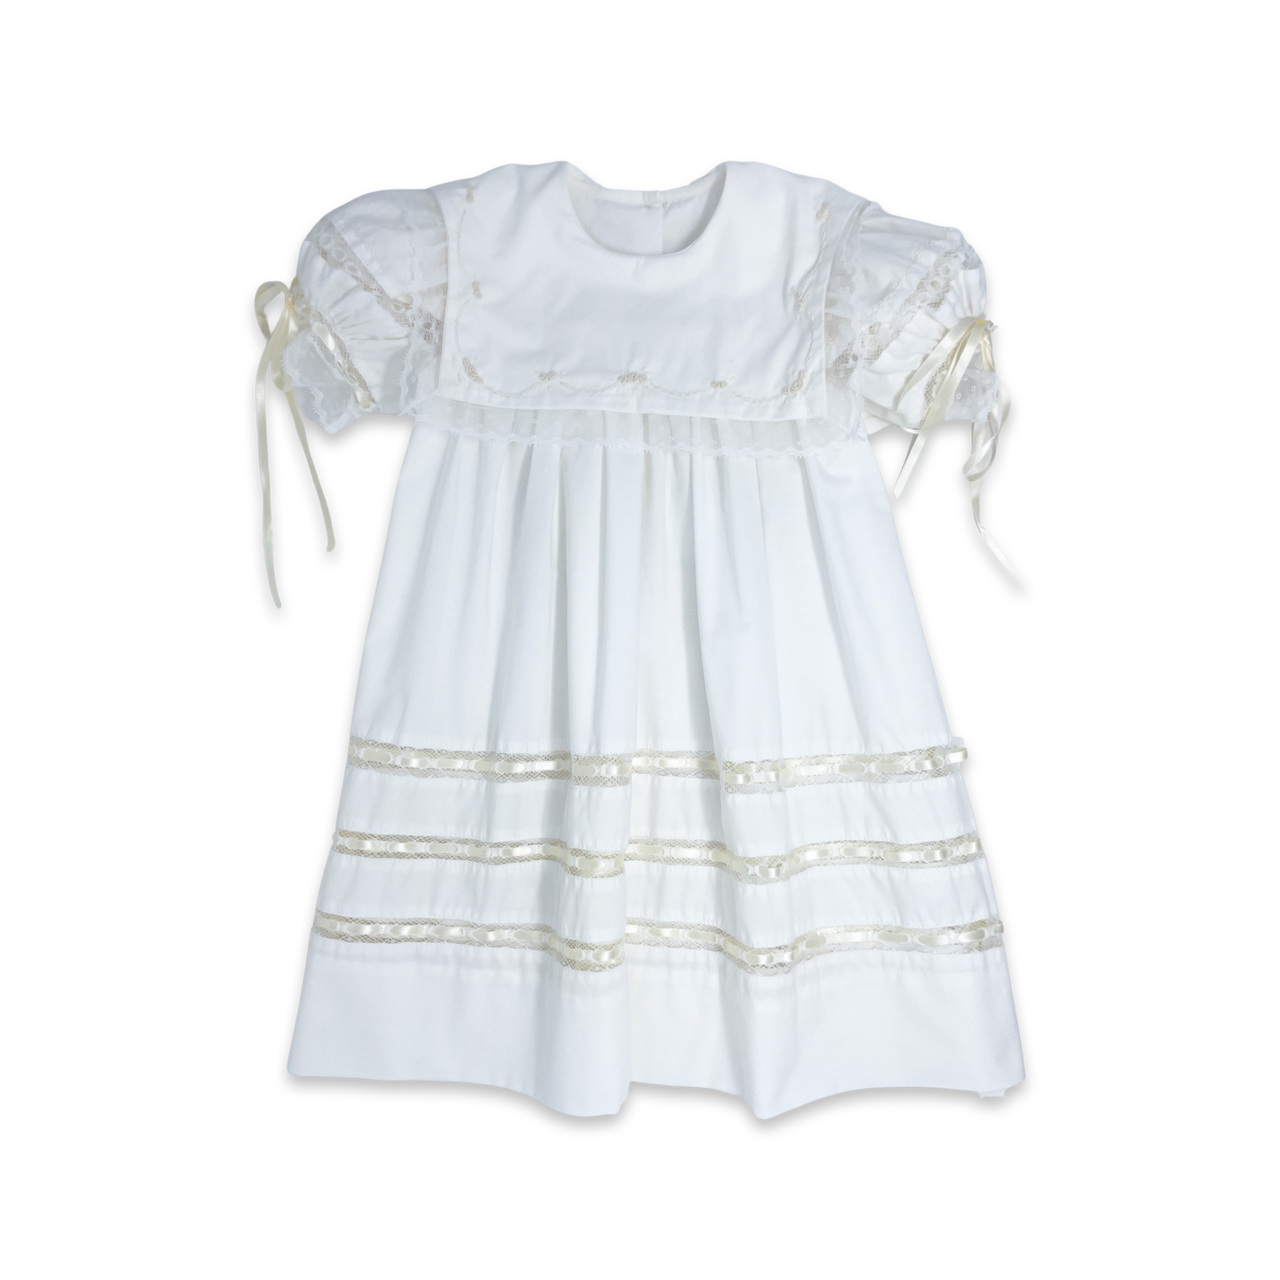 Lullaby Set Elle A Dress Blessings White Batiste Ecru Embroidery J-GDR700WH07E 5012